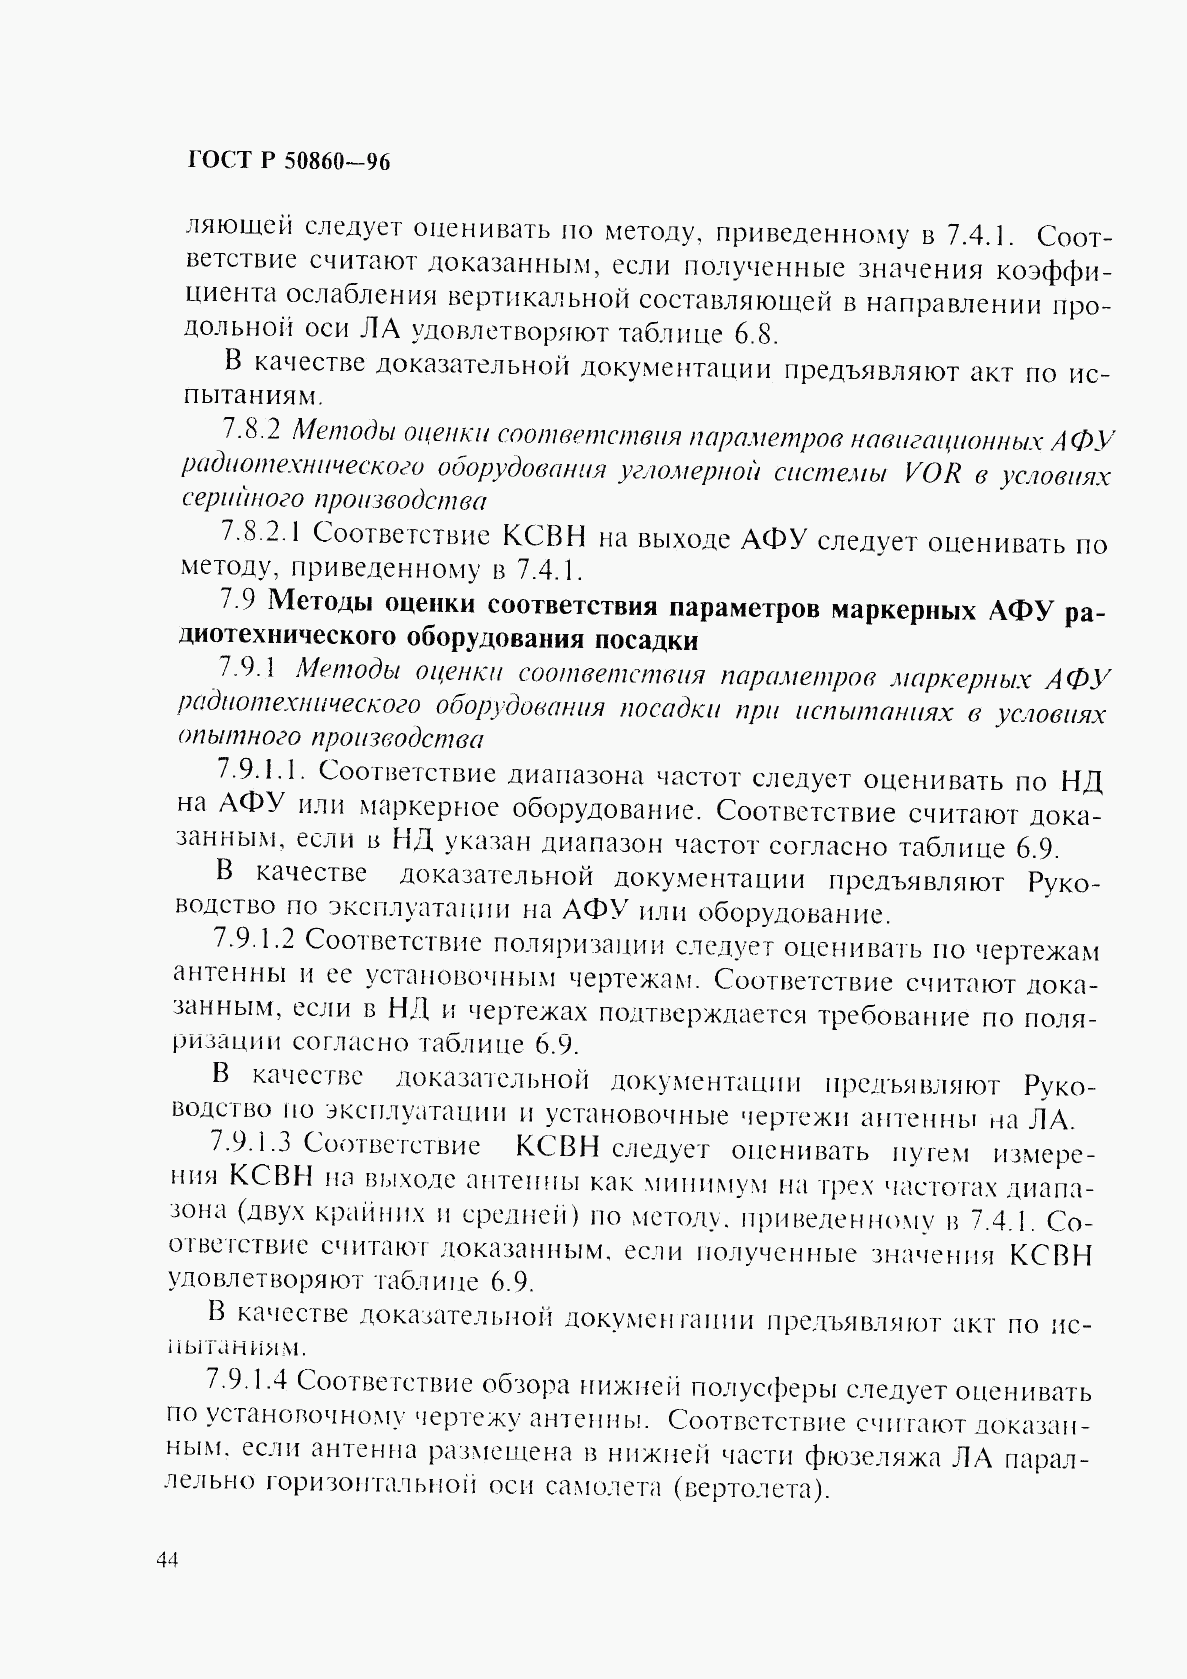 ГОСТ Р 50860-96, страница 49